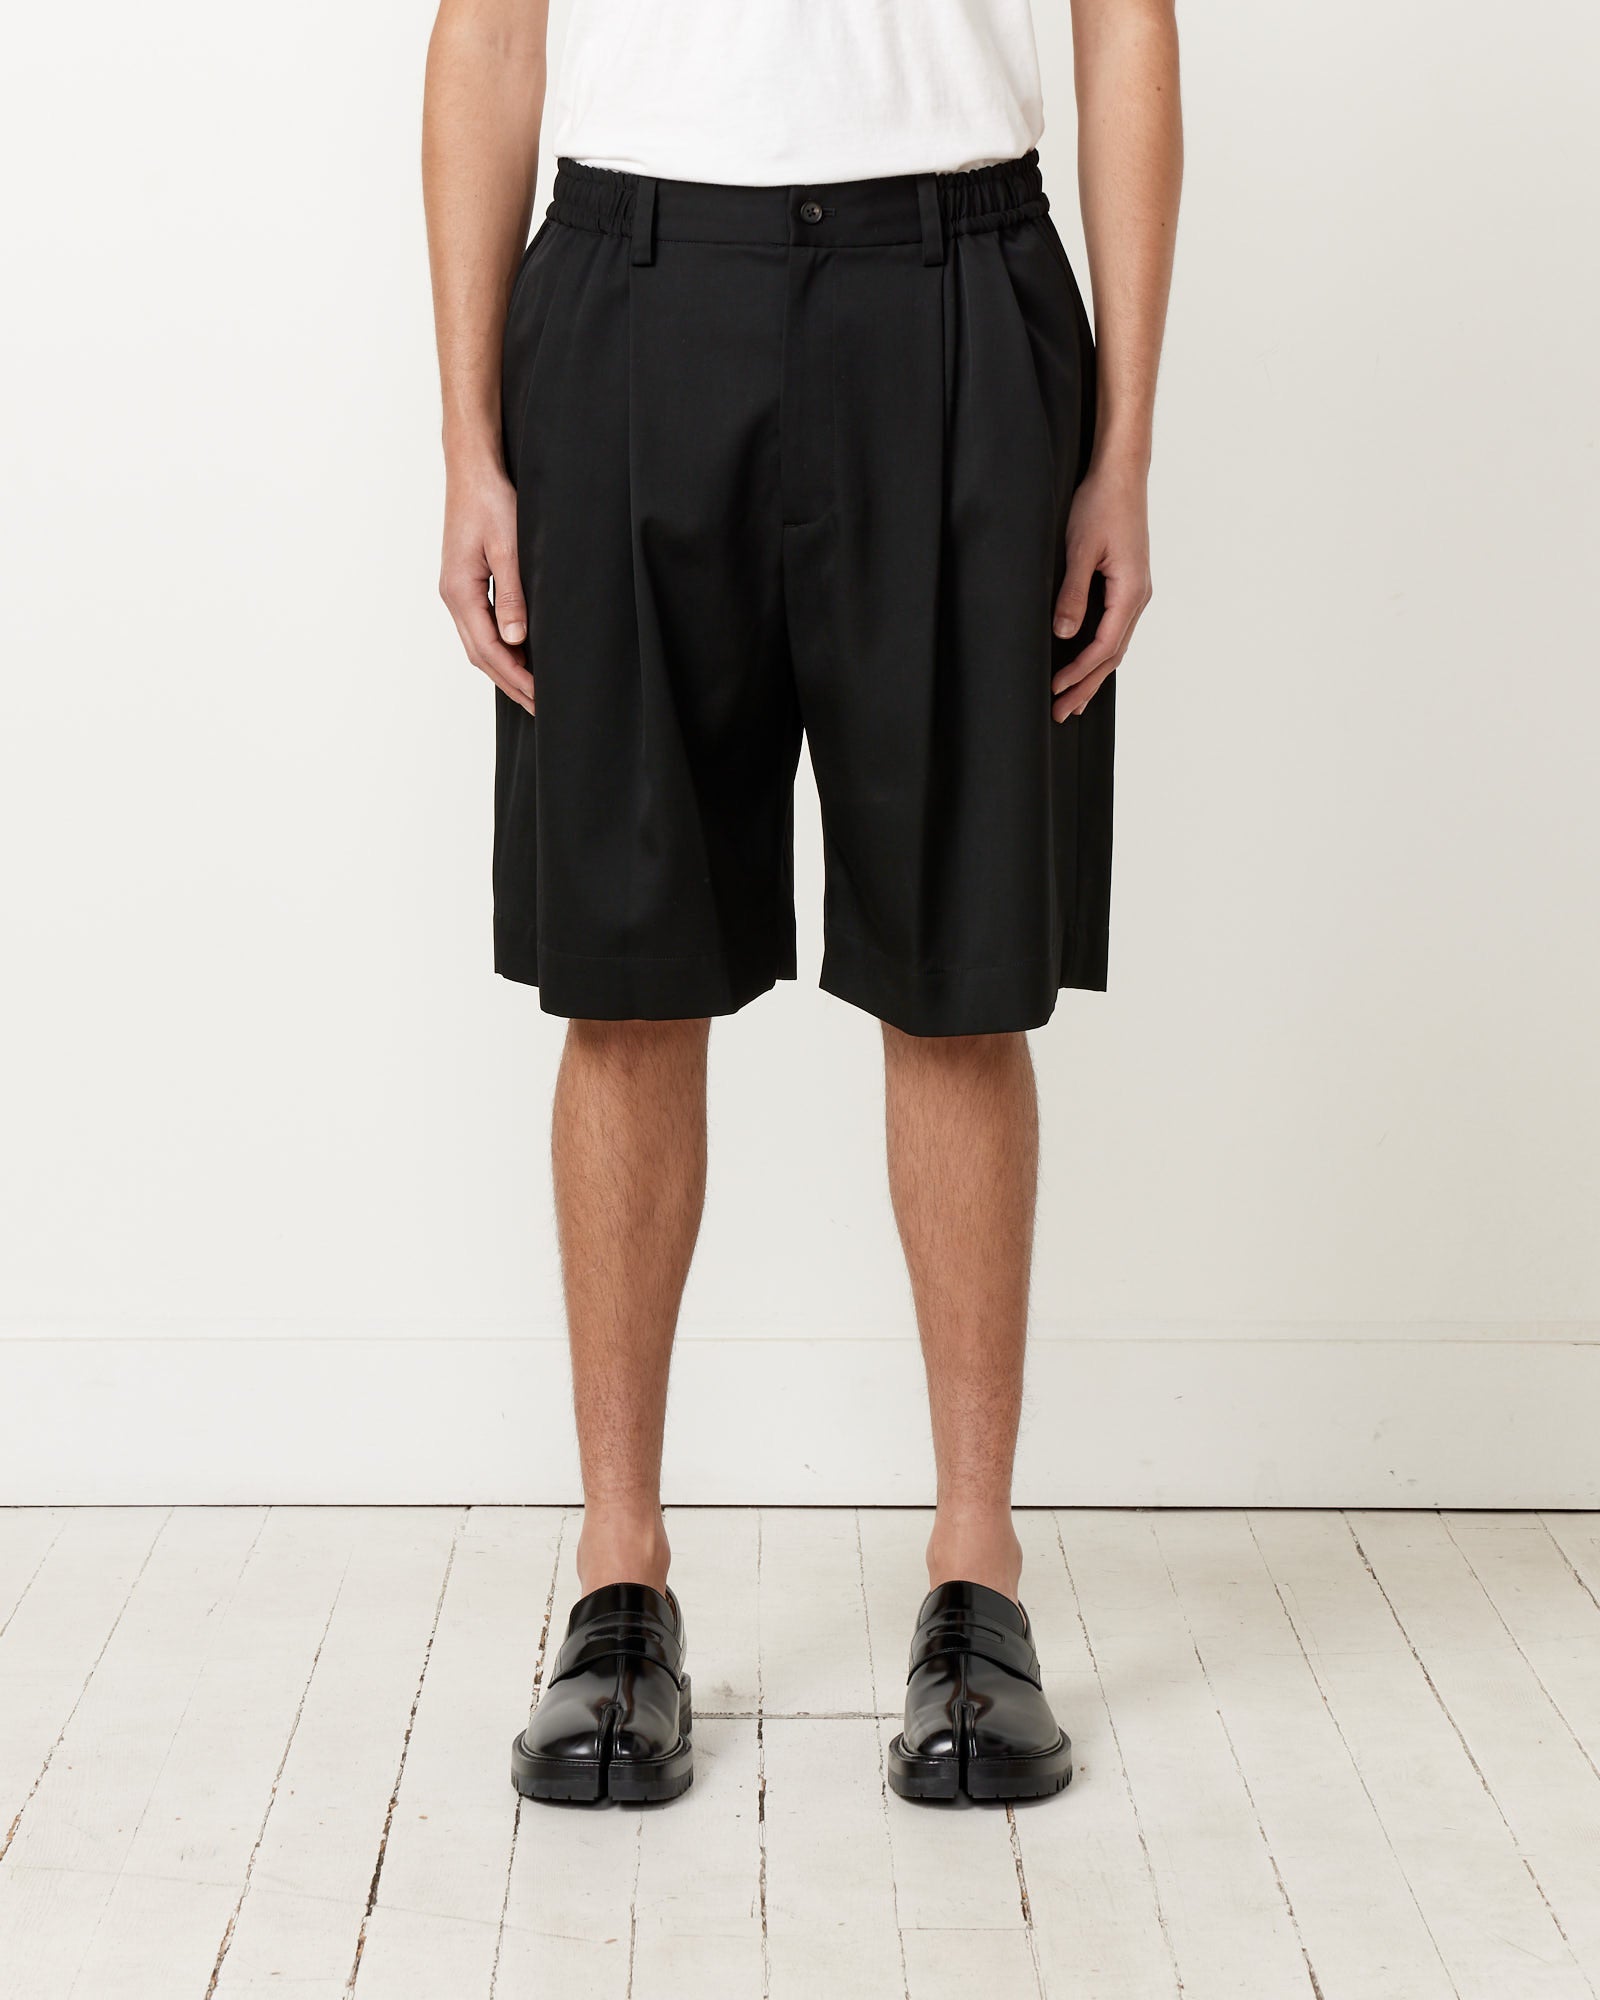 St. 807 Shorts in Black